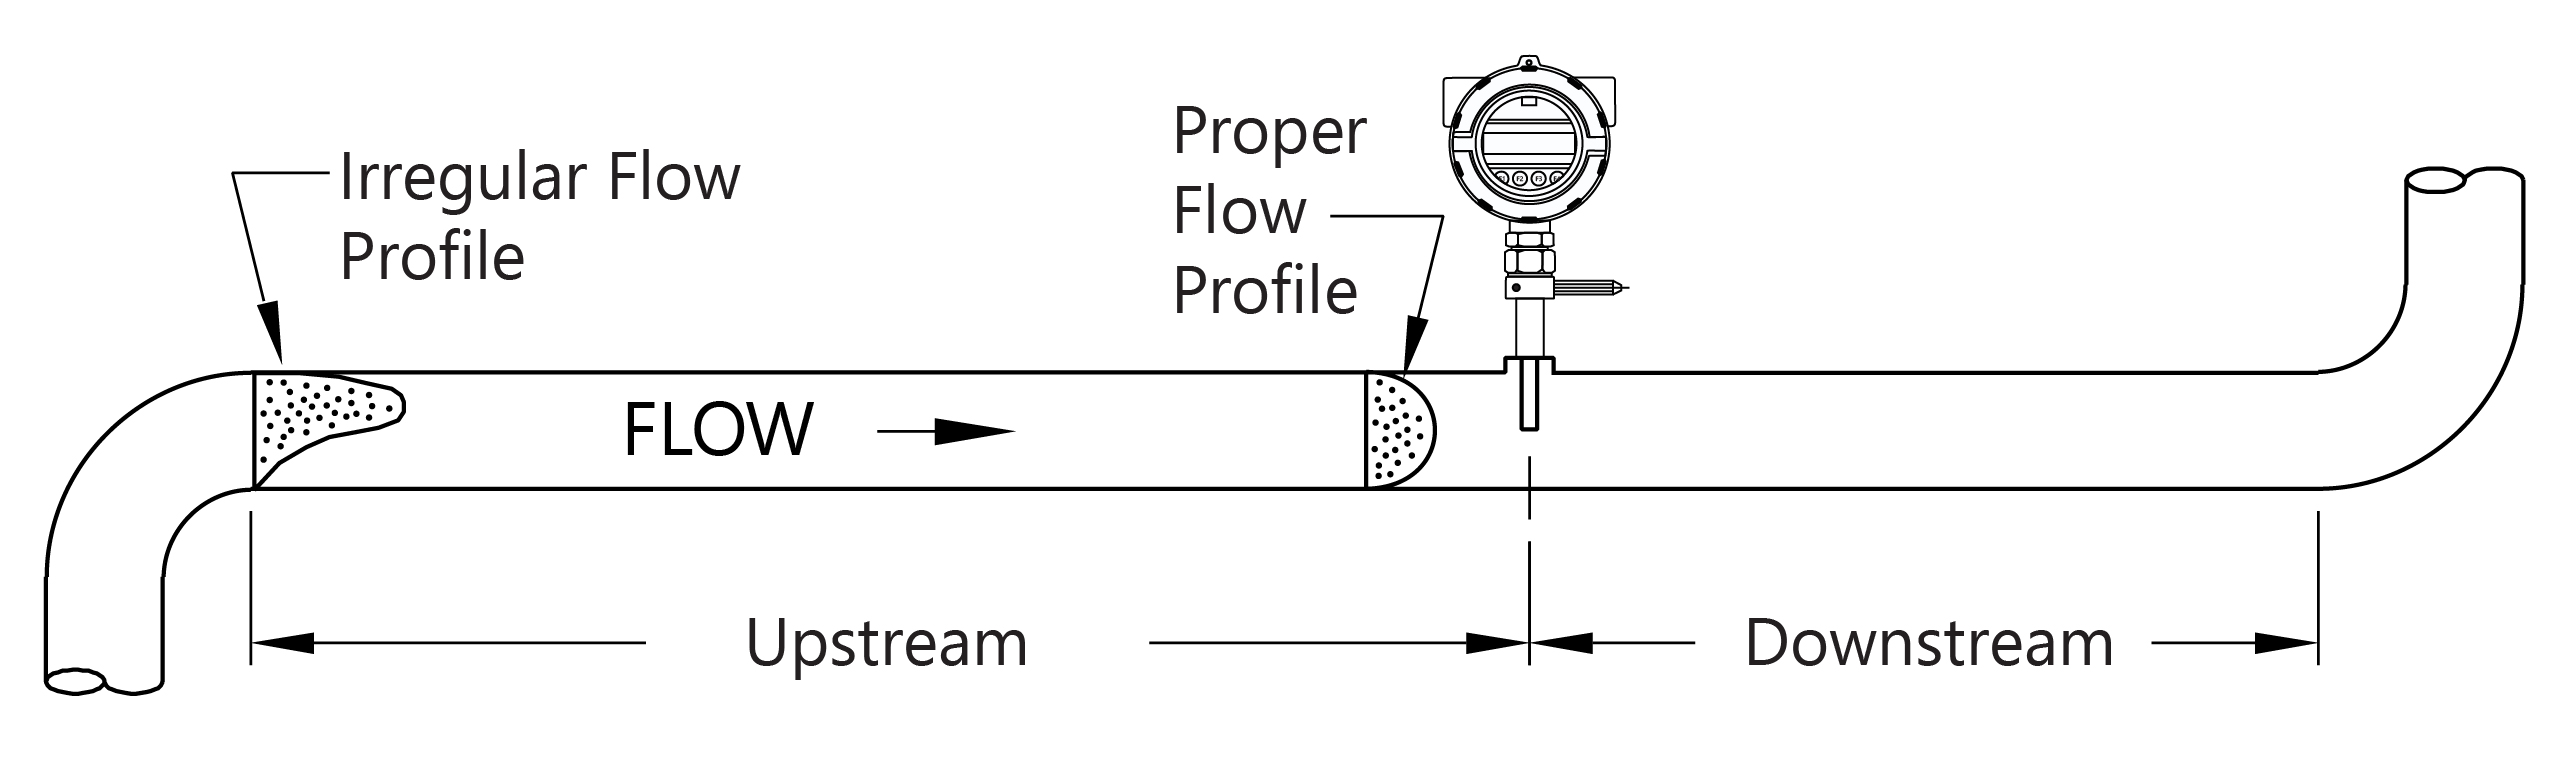 thermal flow meter straight pipe runs